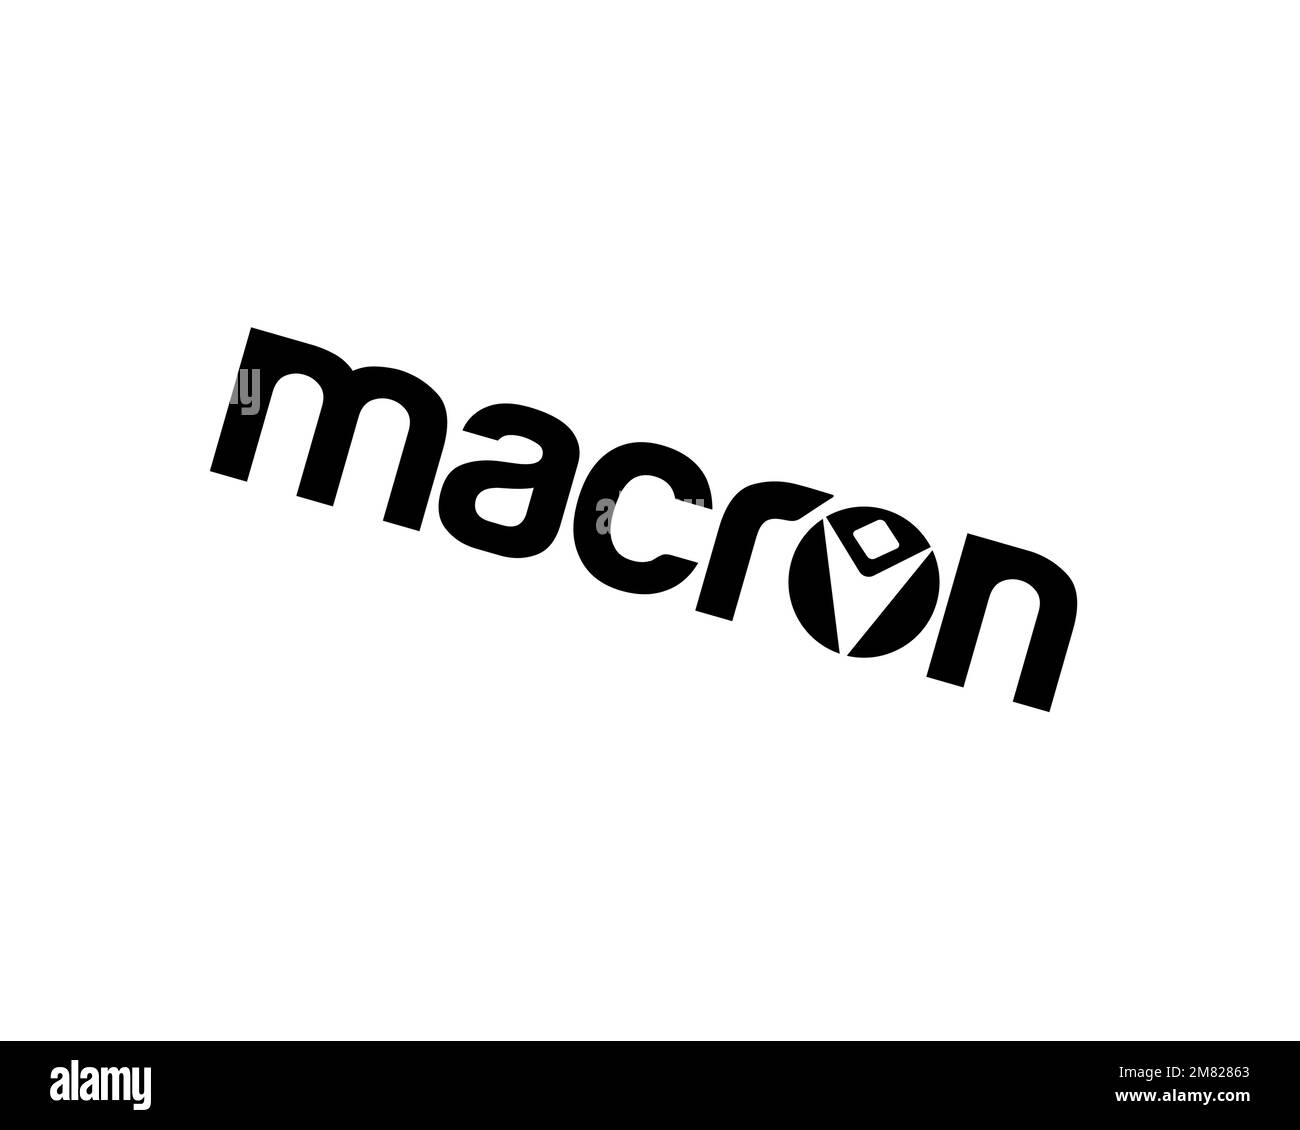 Macron logo hi-res stock photography and images - Alamy